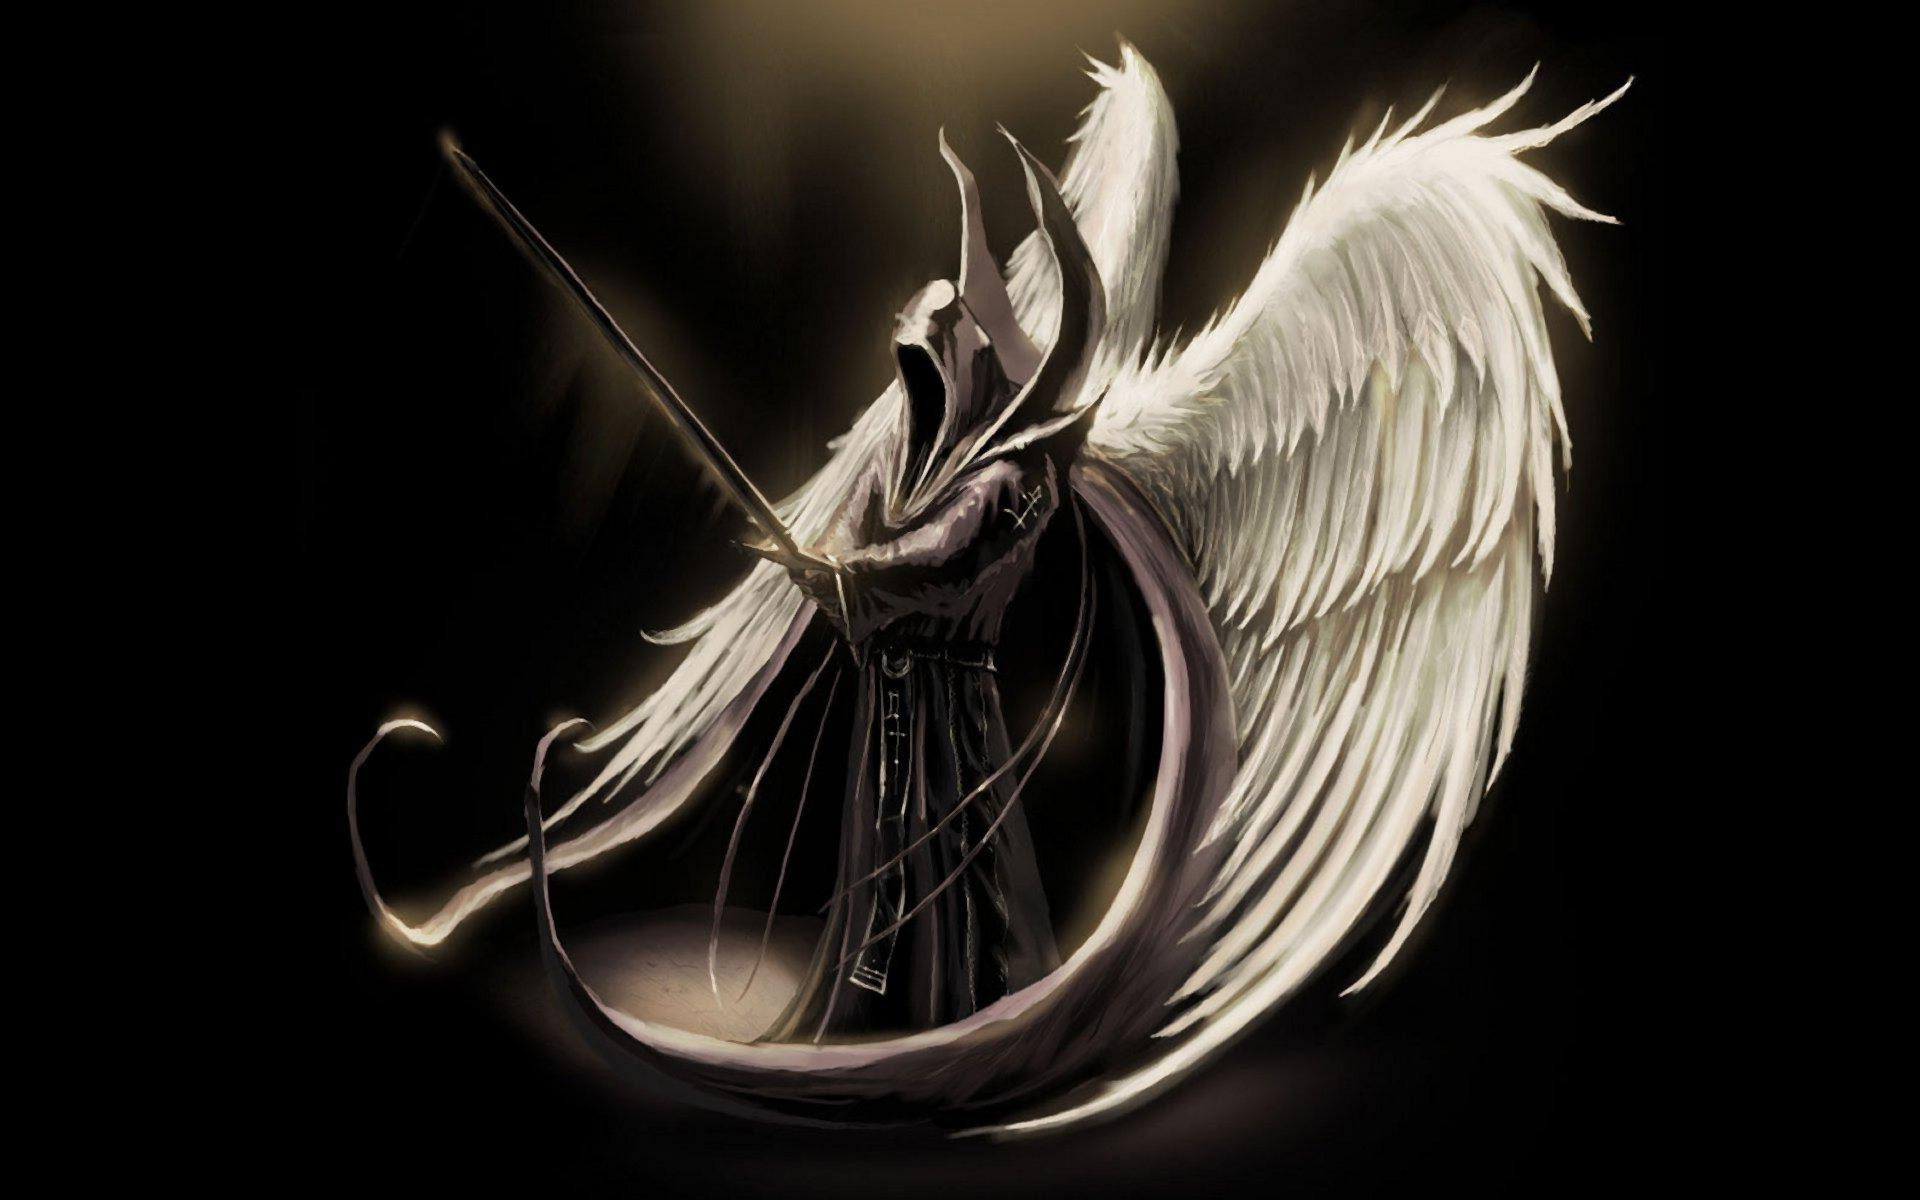 Dark Angel with wings, hood, and sword.